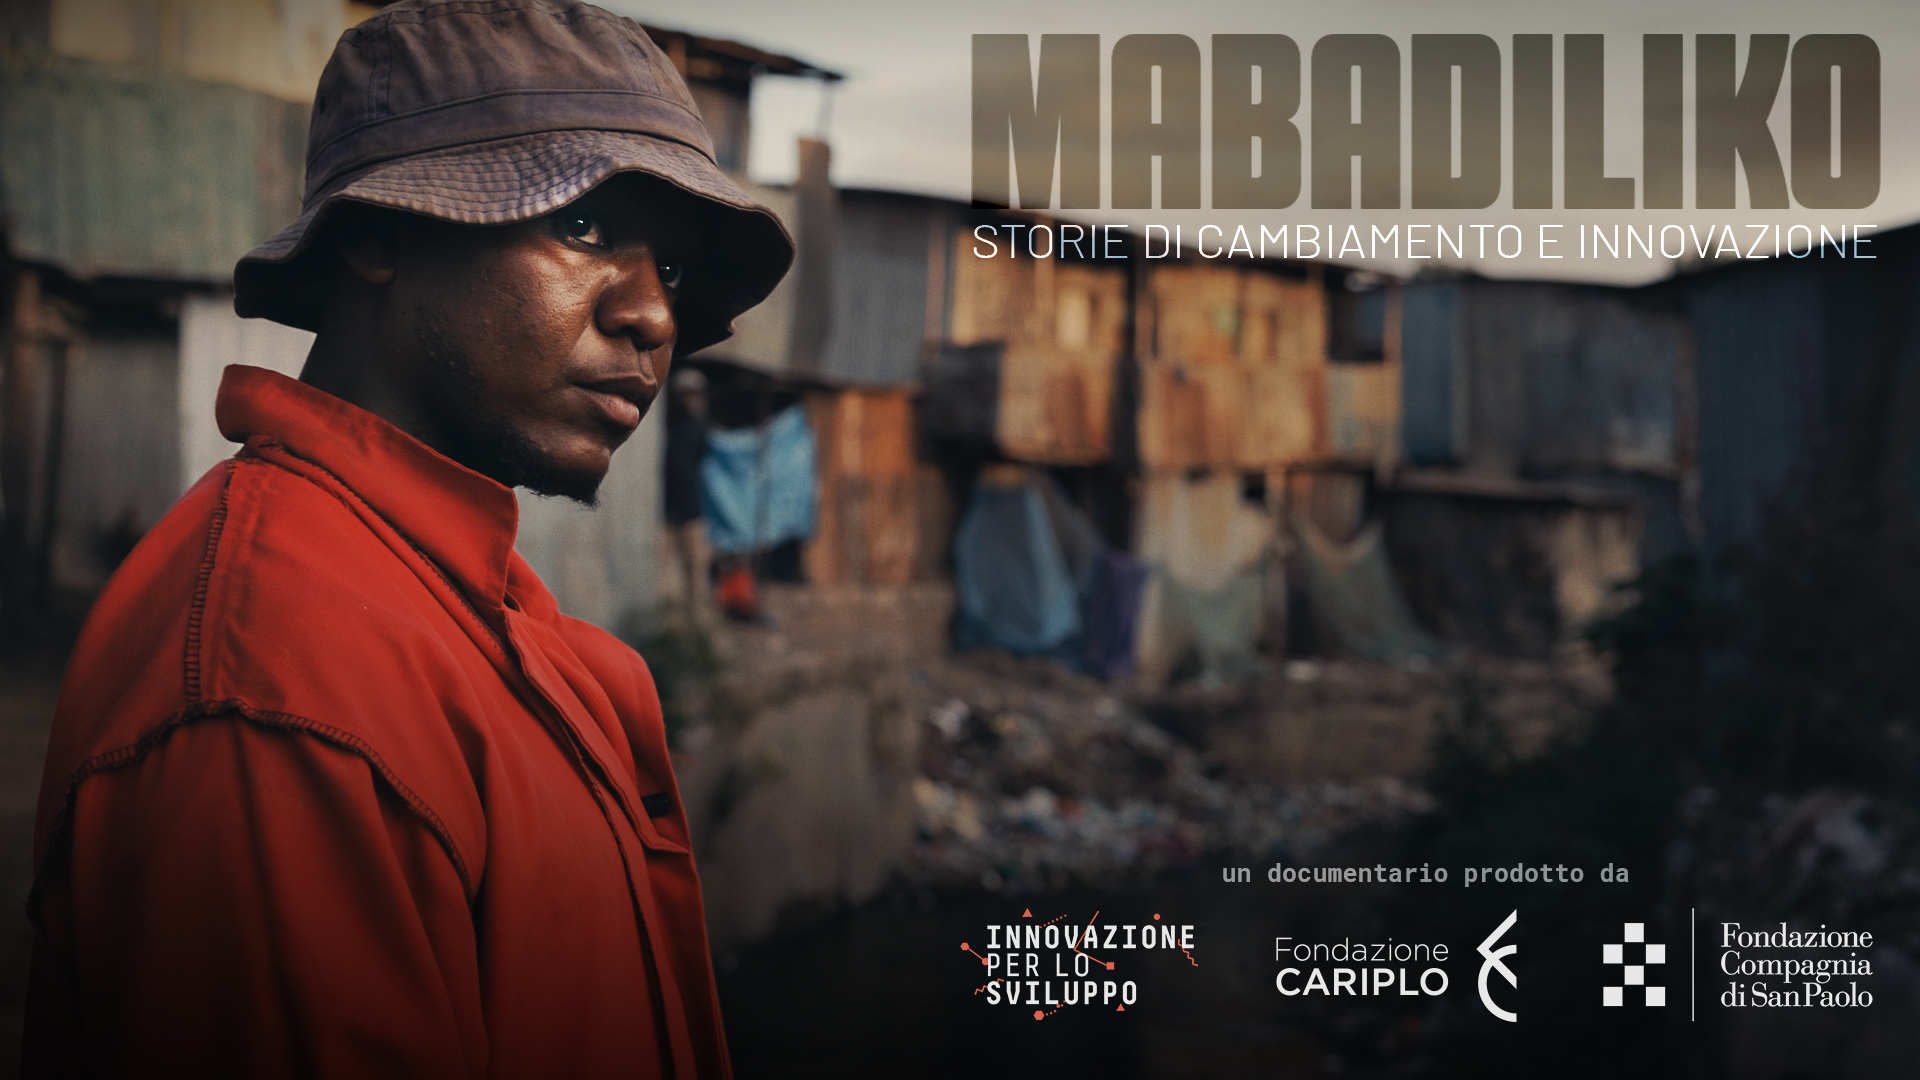 Mabadiliko: Stories of change and innovation